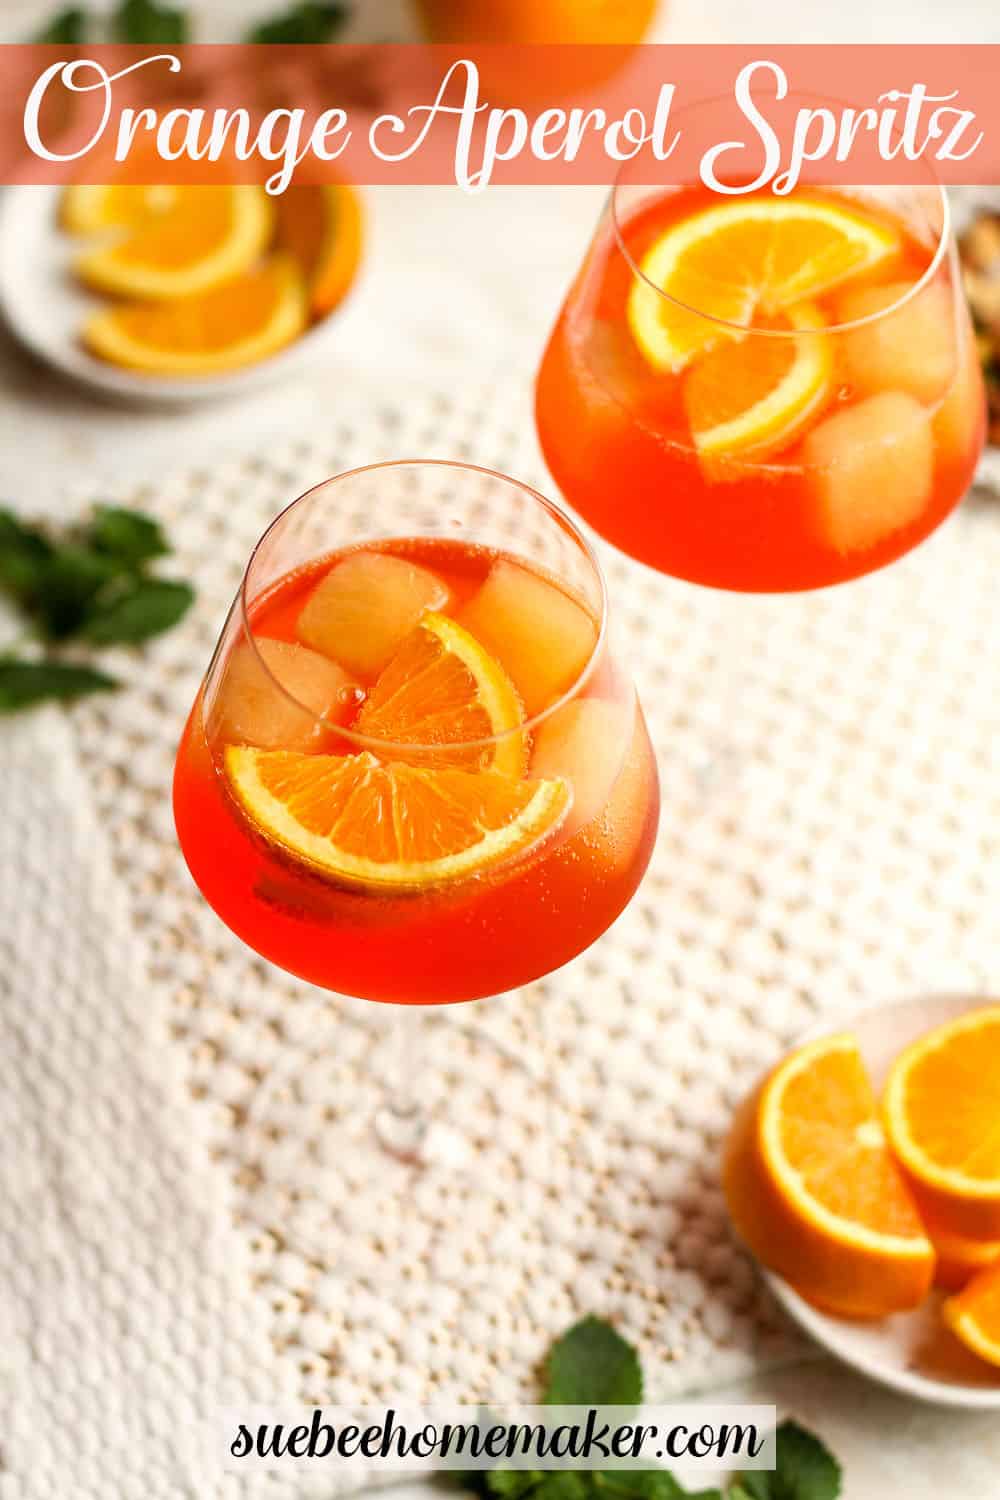 Overhead shot of two wine glasses of orange aperol spritz with orange slices.